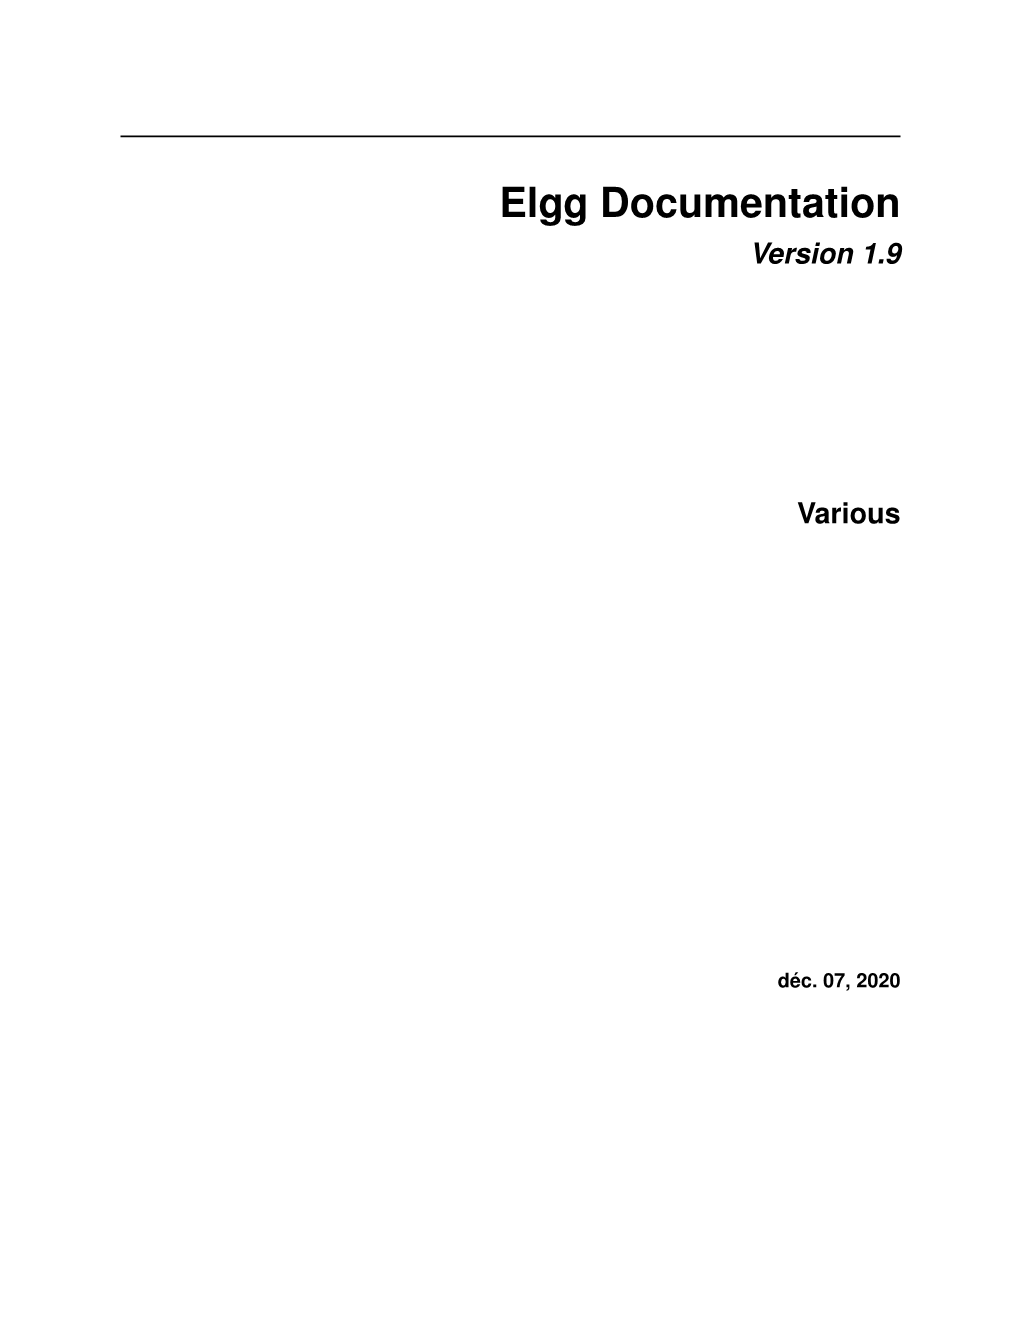 Elgg Documentation Version 1.9 Various